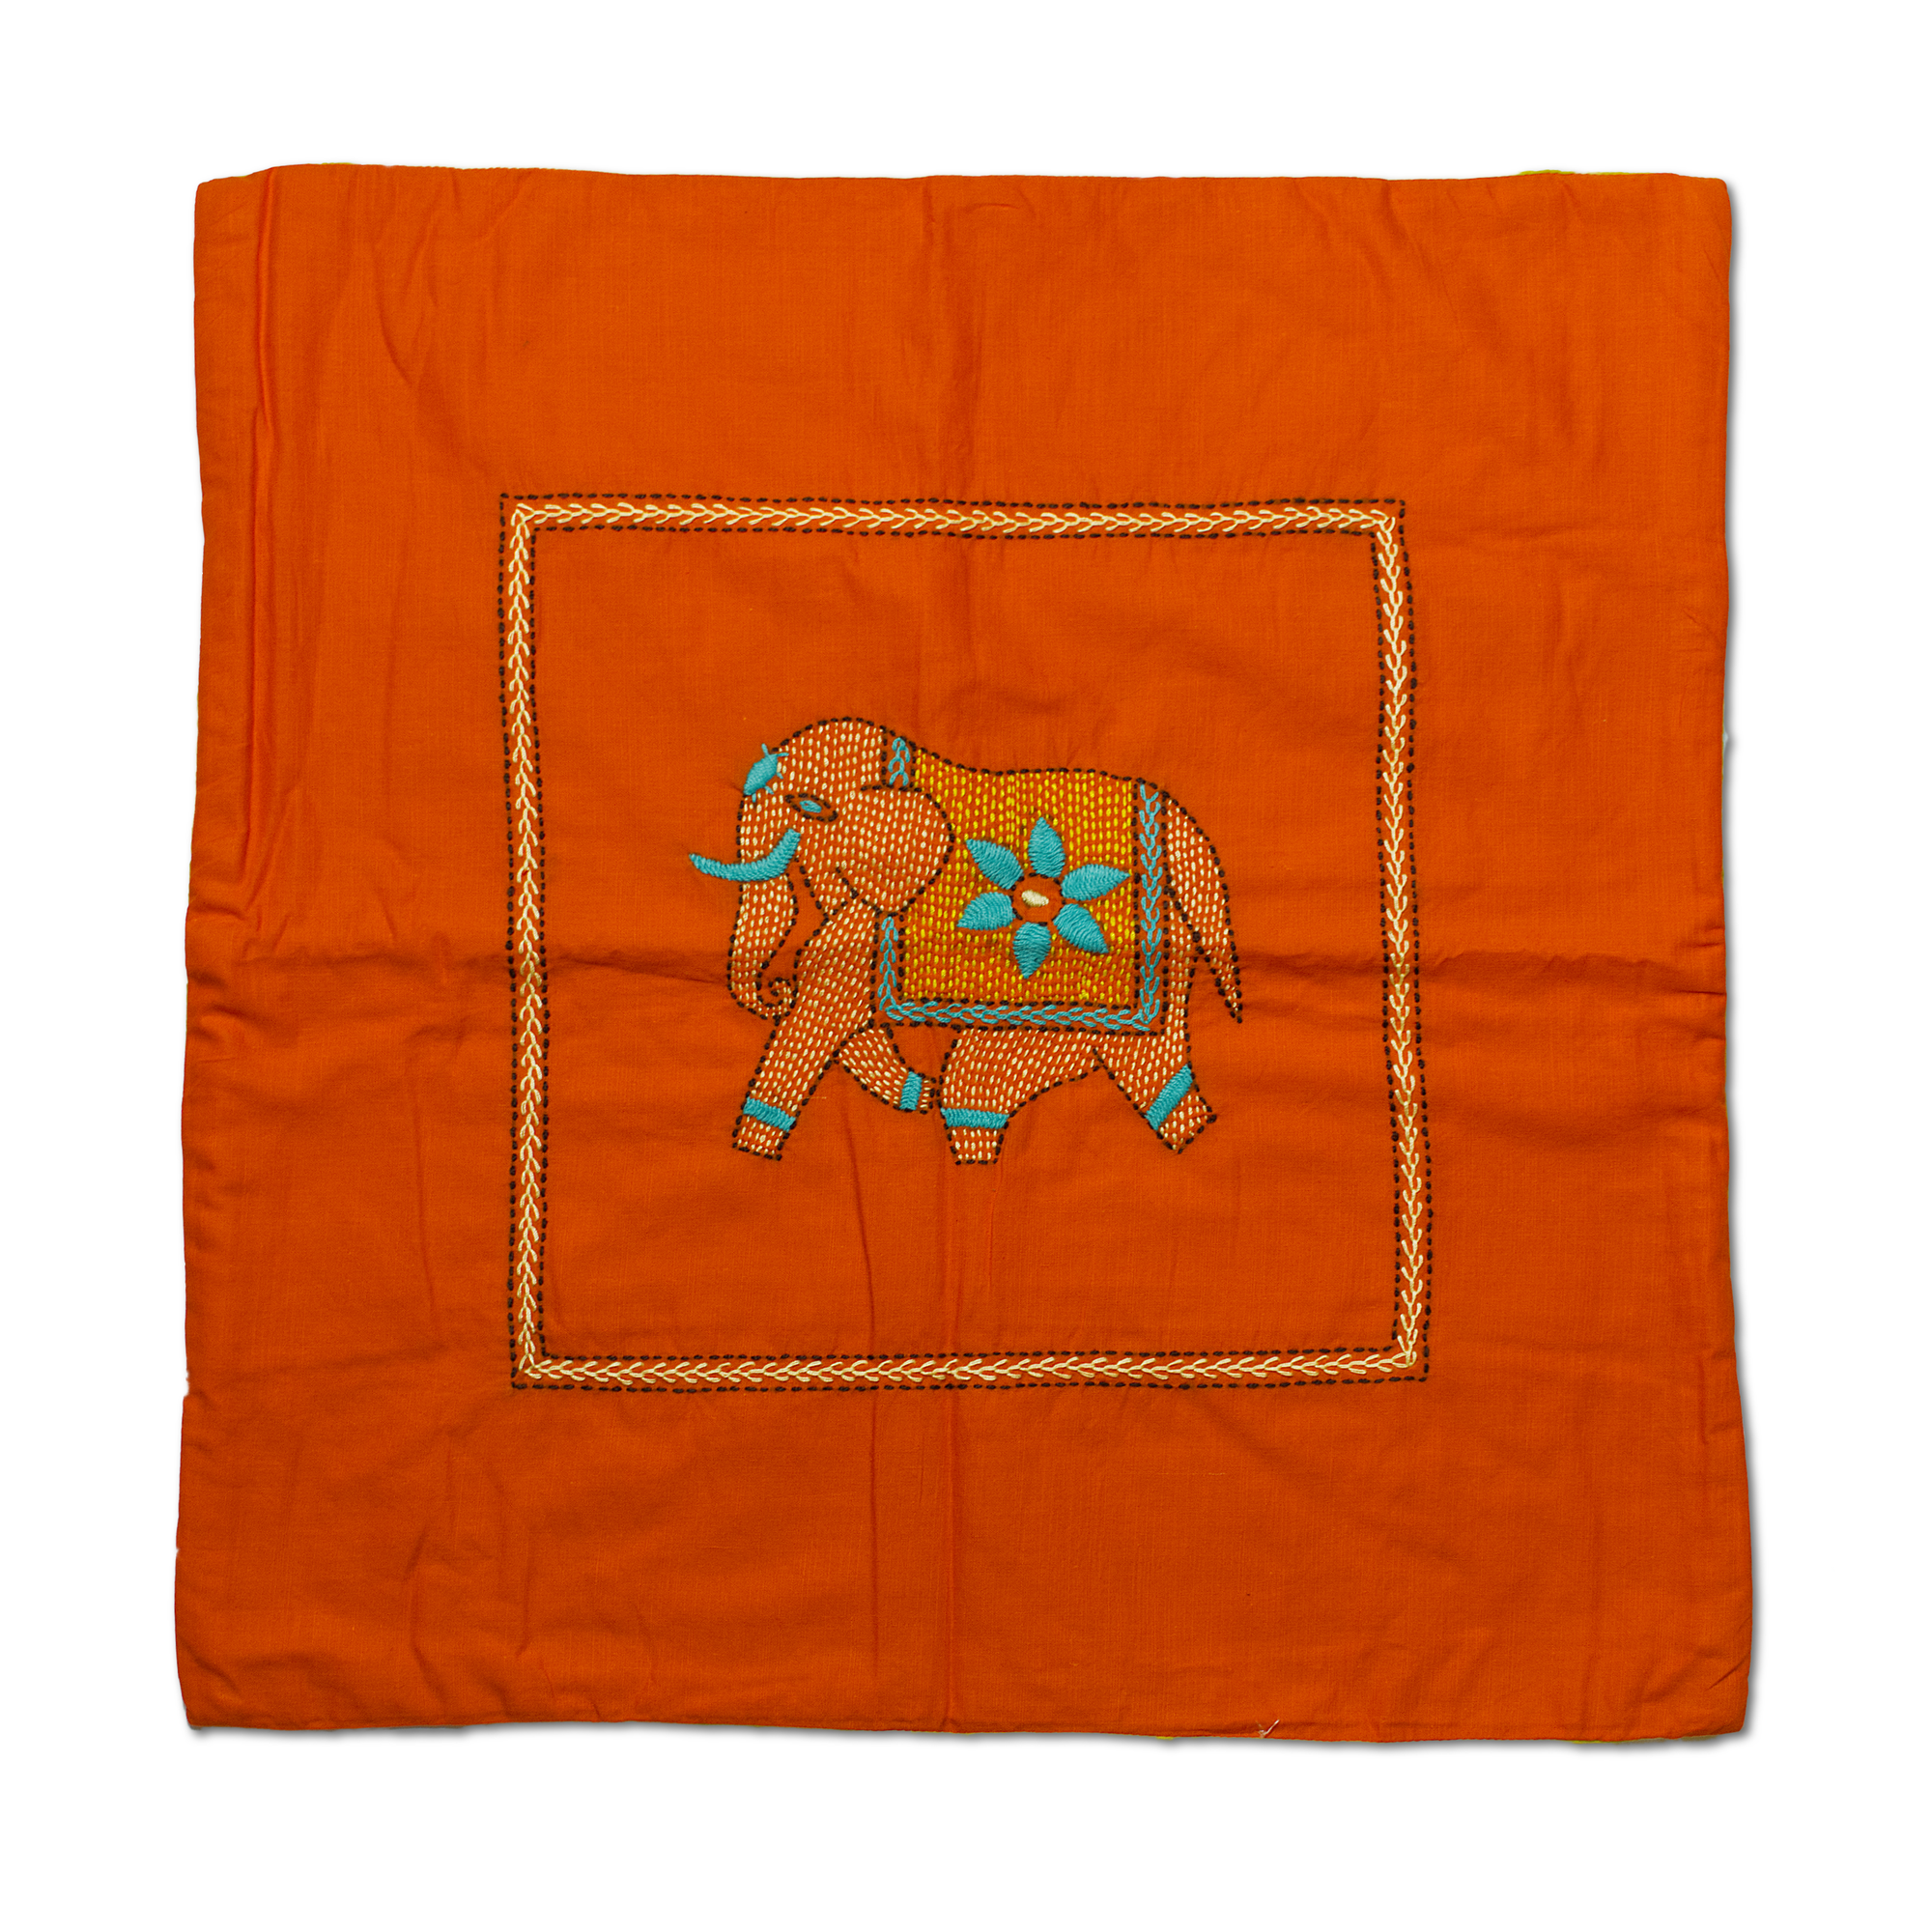 Cushion Covers - Dinajpur (elephant) Design - Asif (Orange)